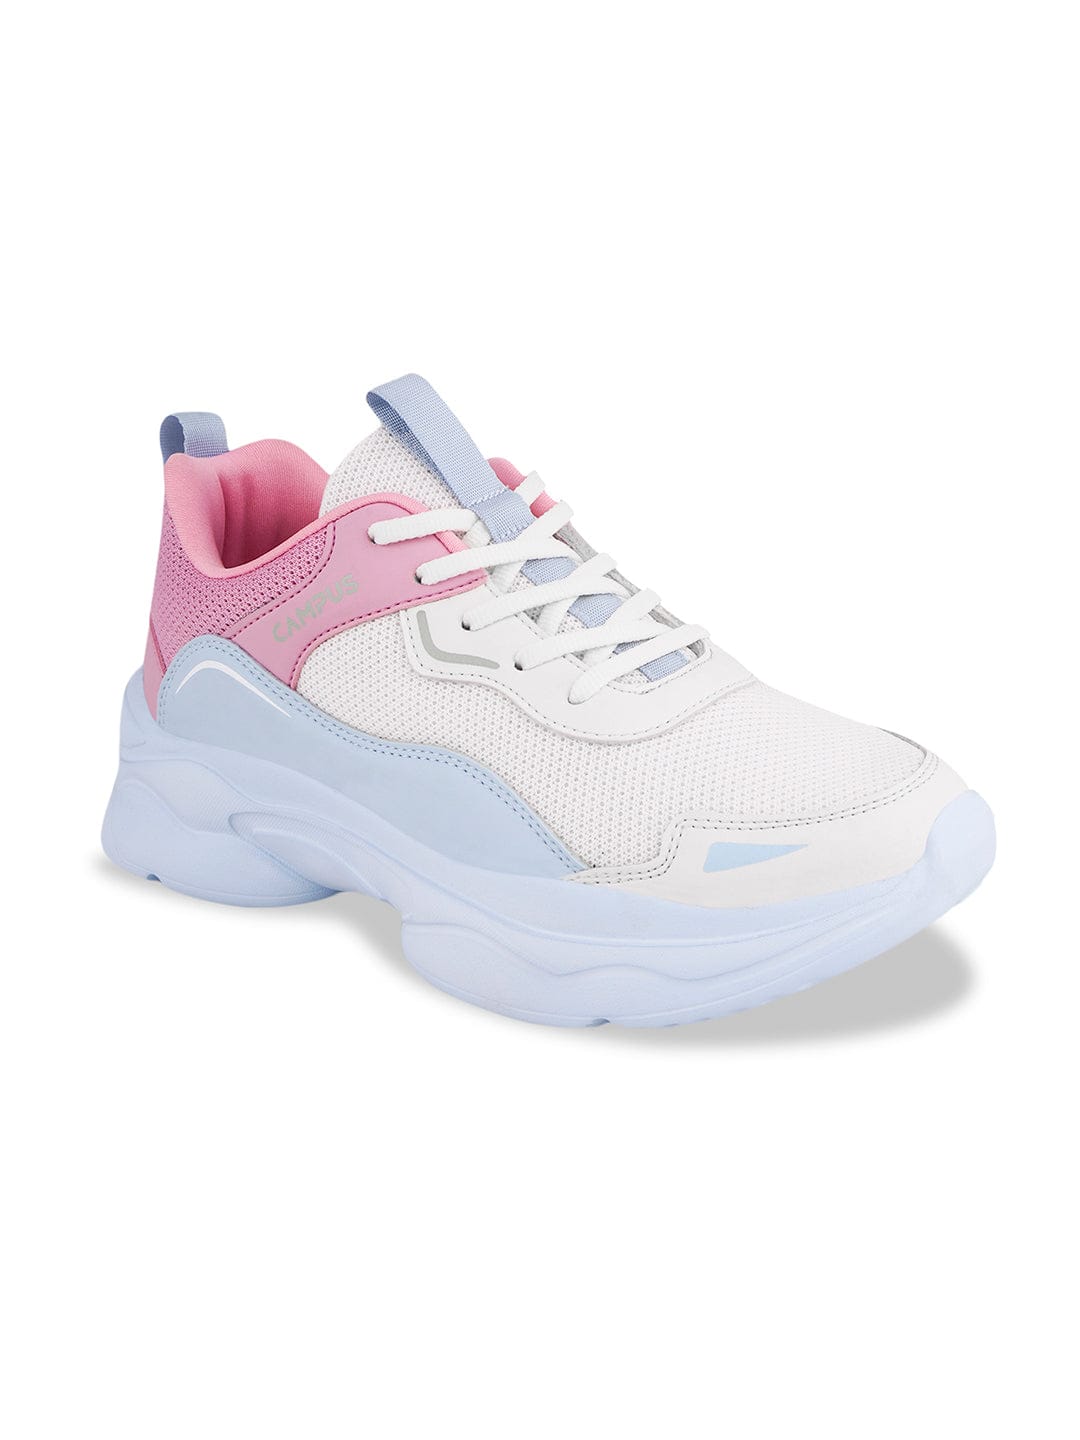 Buy Sports Shoes For Women: Santigo-Off-Wht-Pink | Campus Shoes